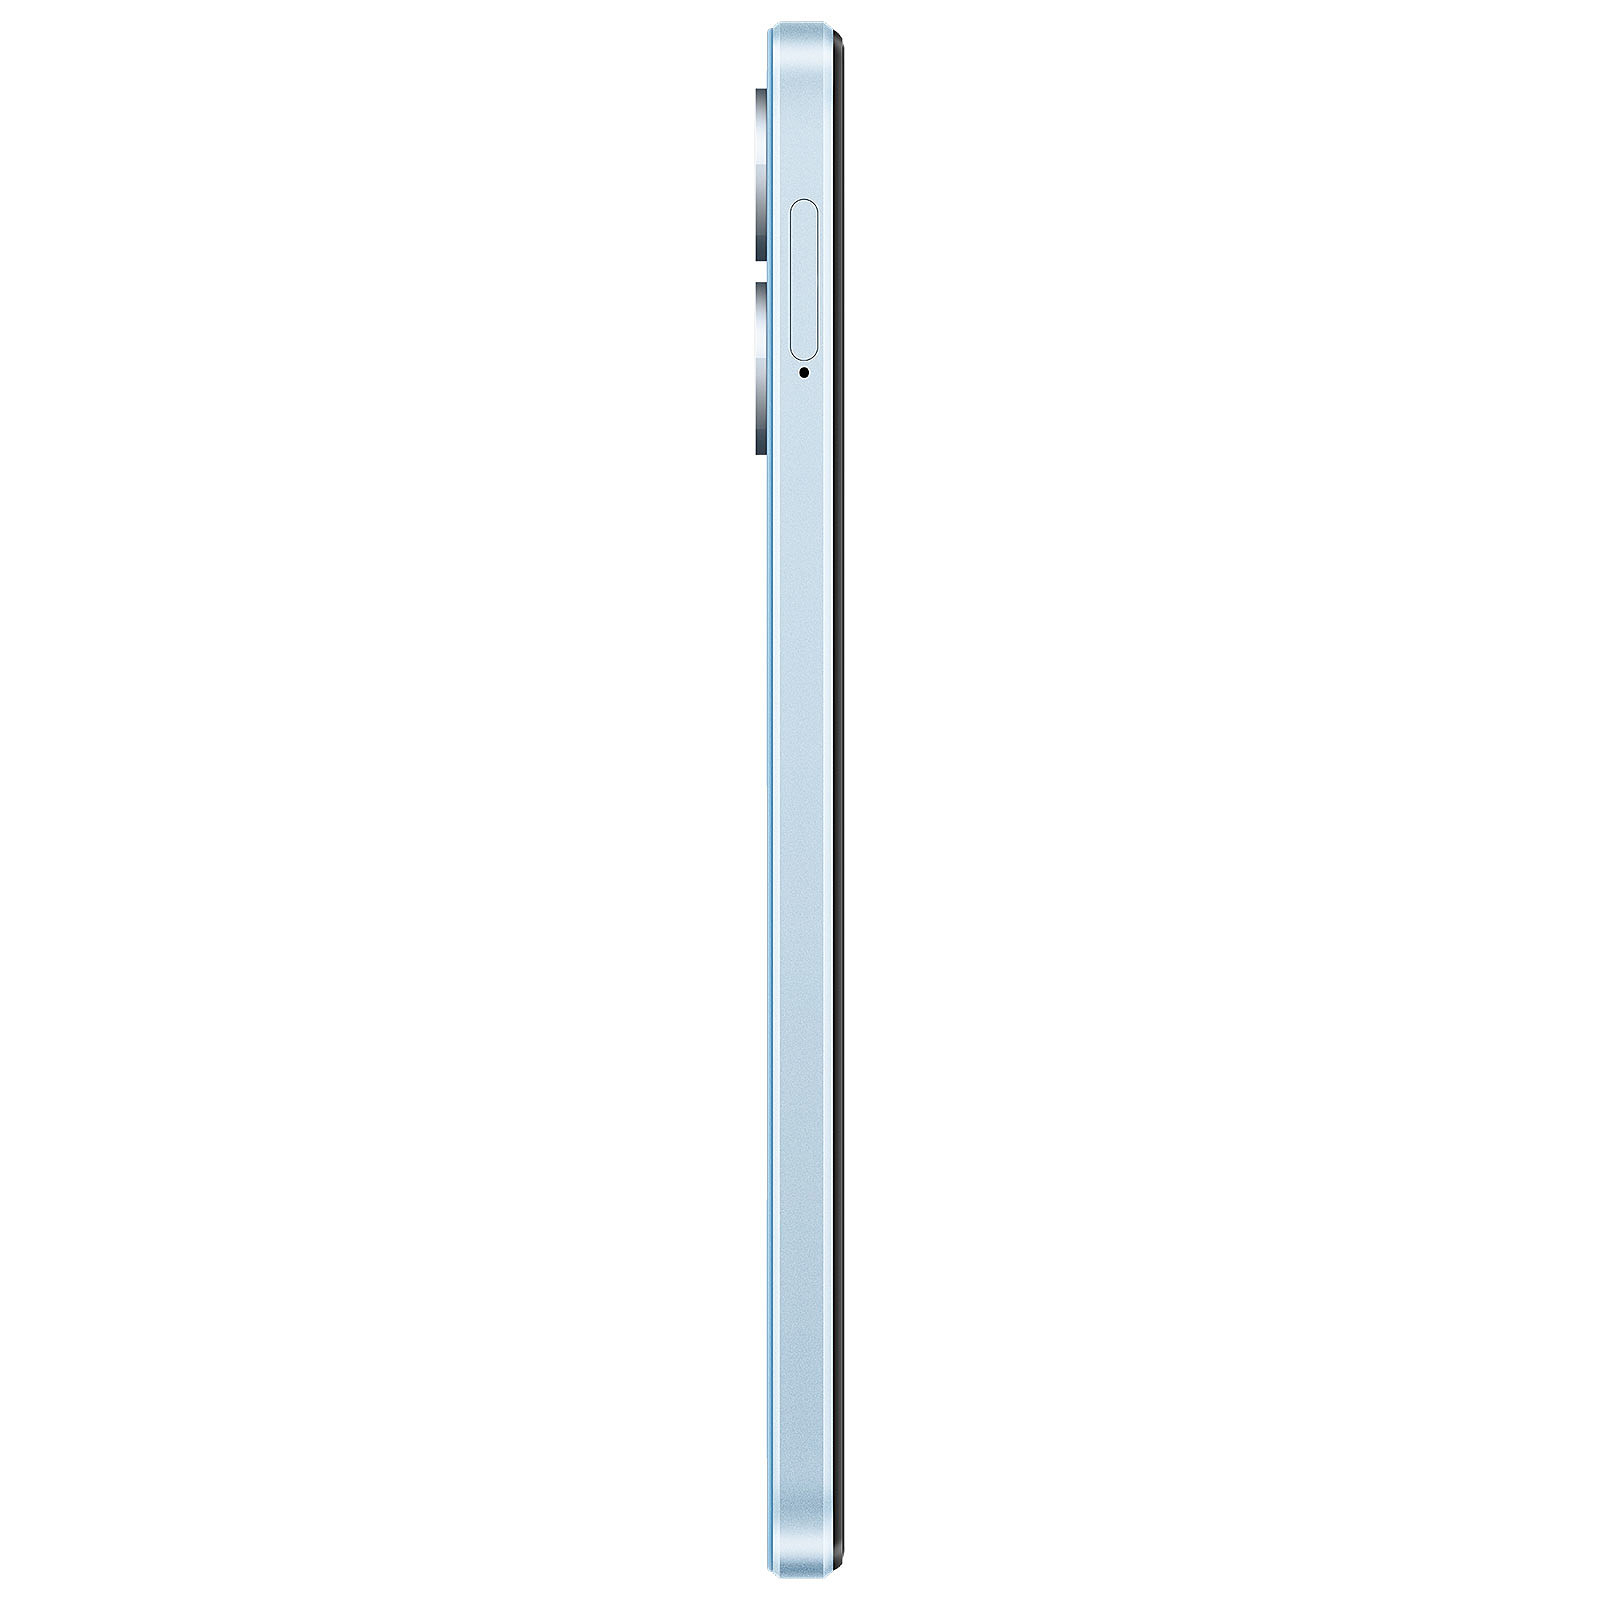 Мобильный телефон Oppo A17 4/64GB Lake Blue (OFCPH2477_BLUE) изображение 3